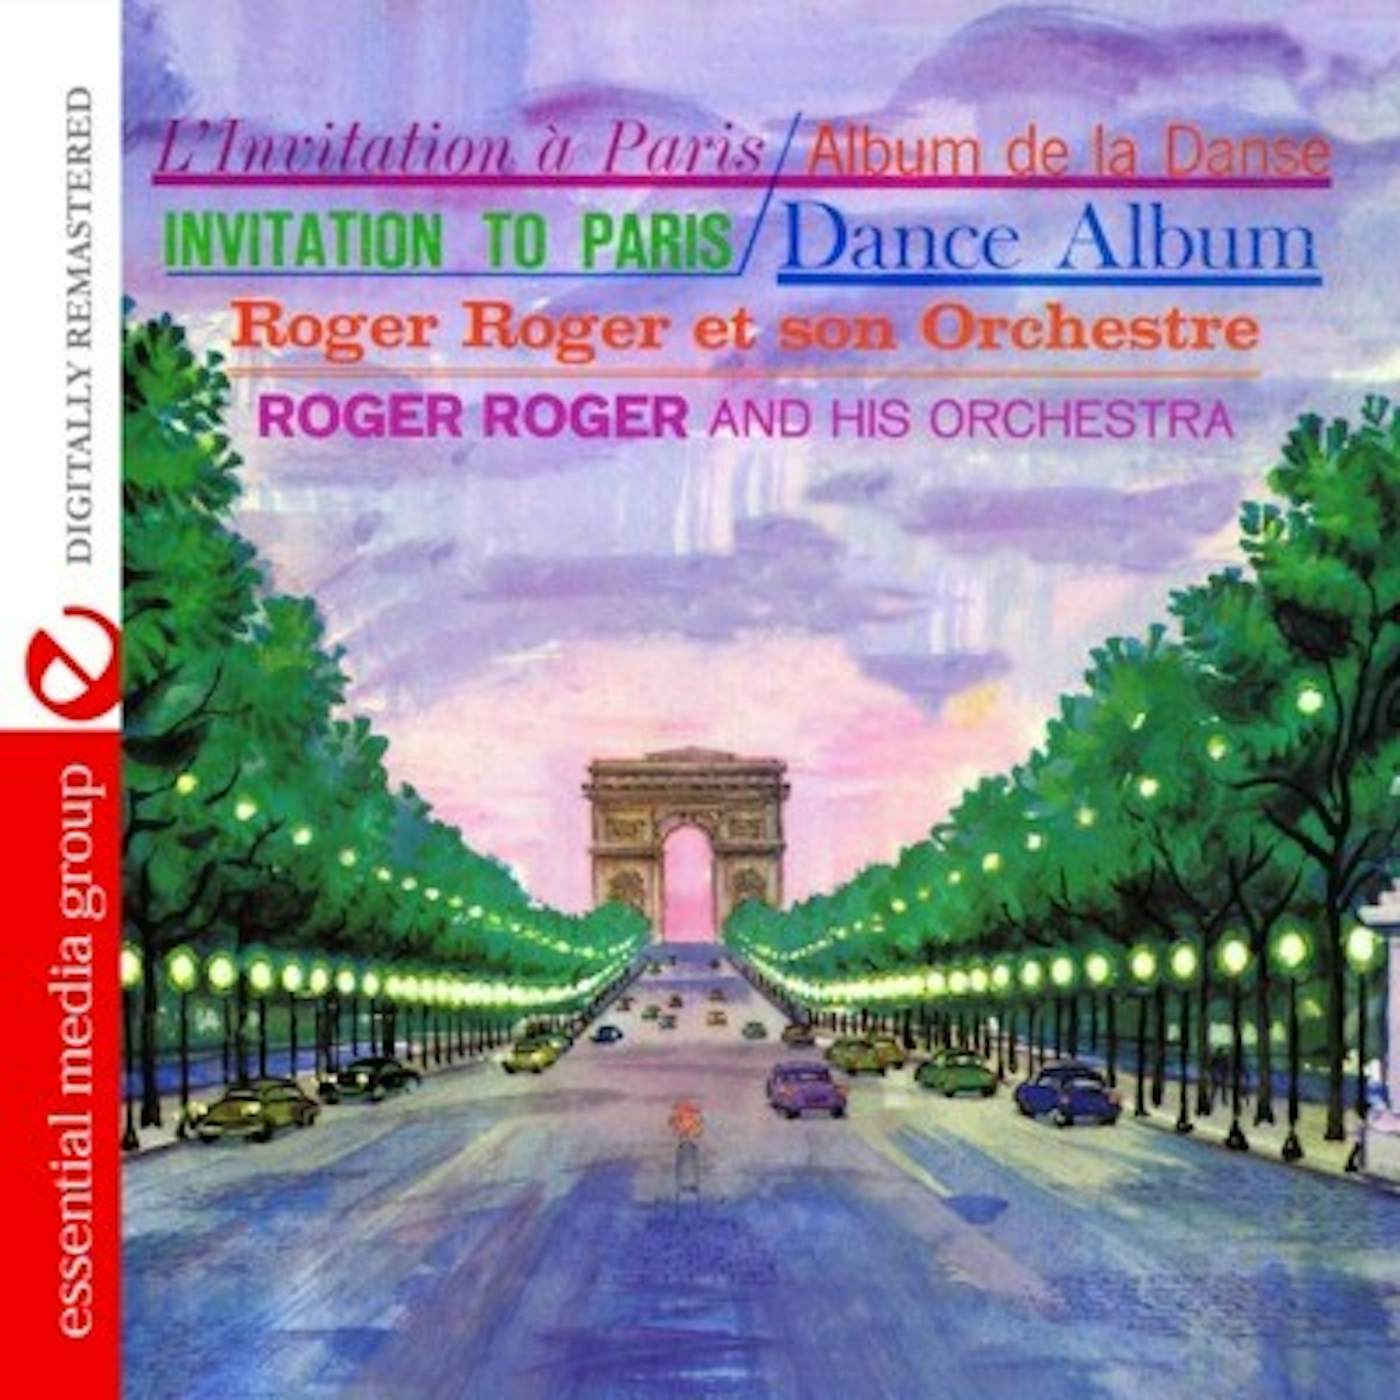 Roger Roger INVITATION TO PARIS CD